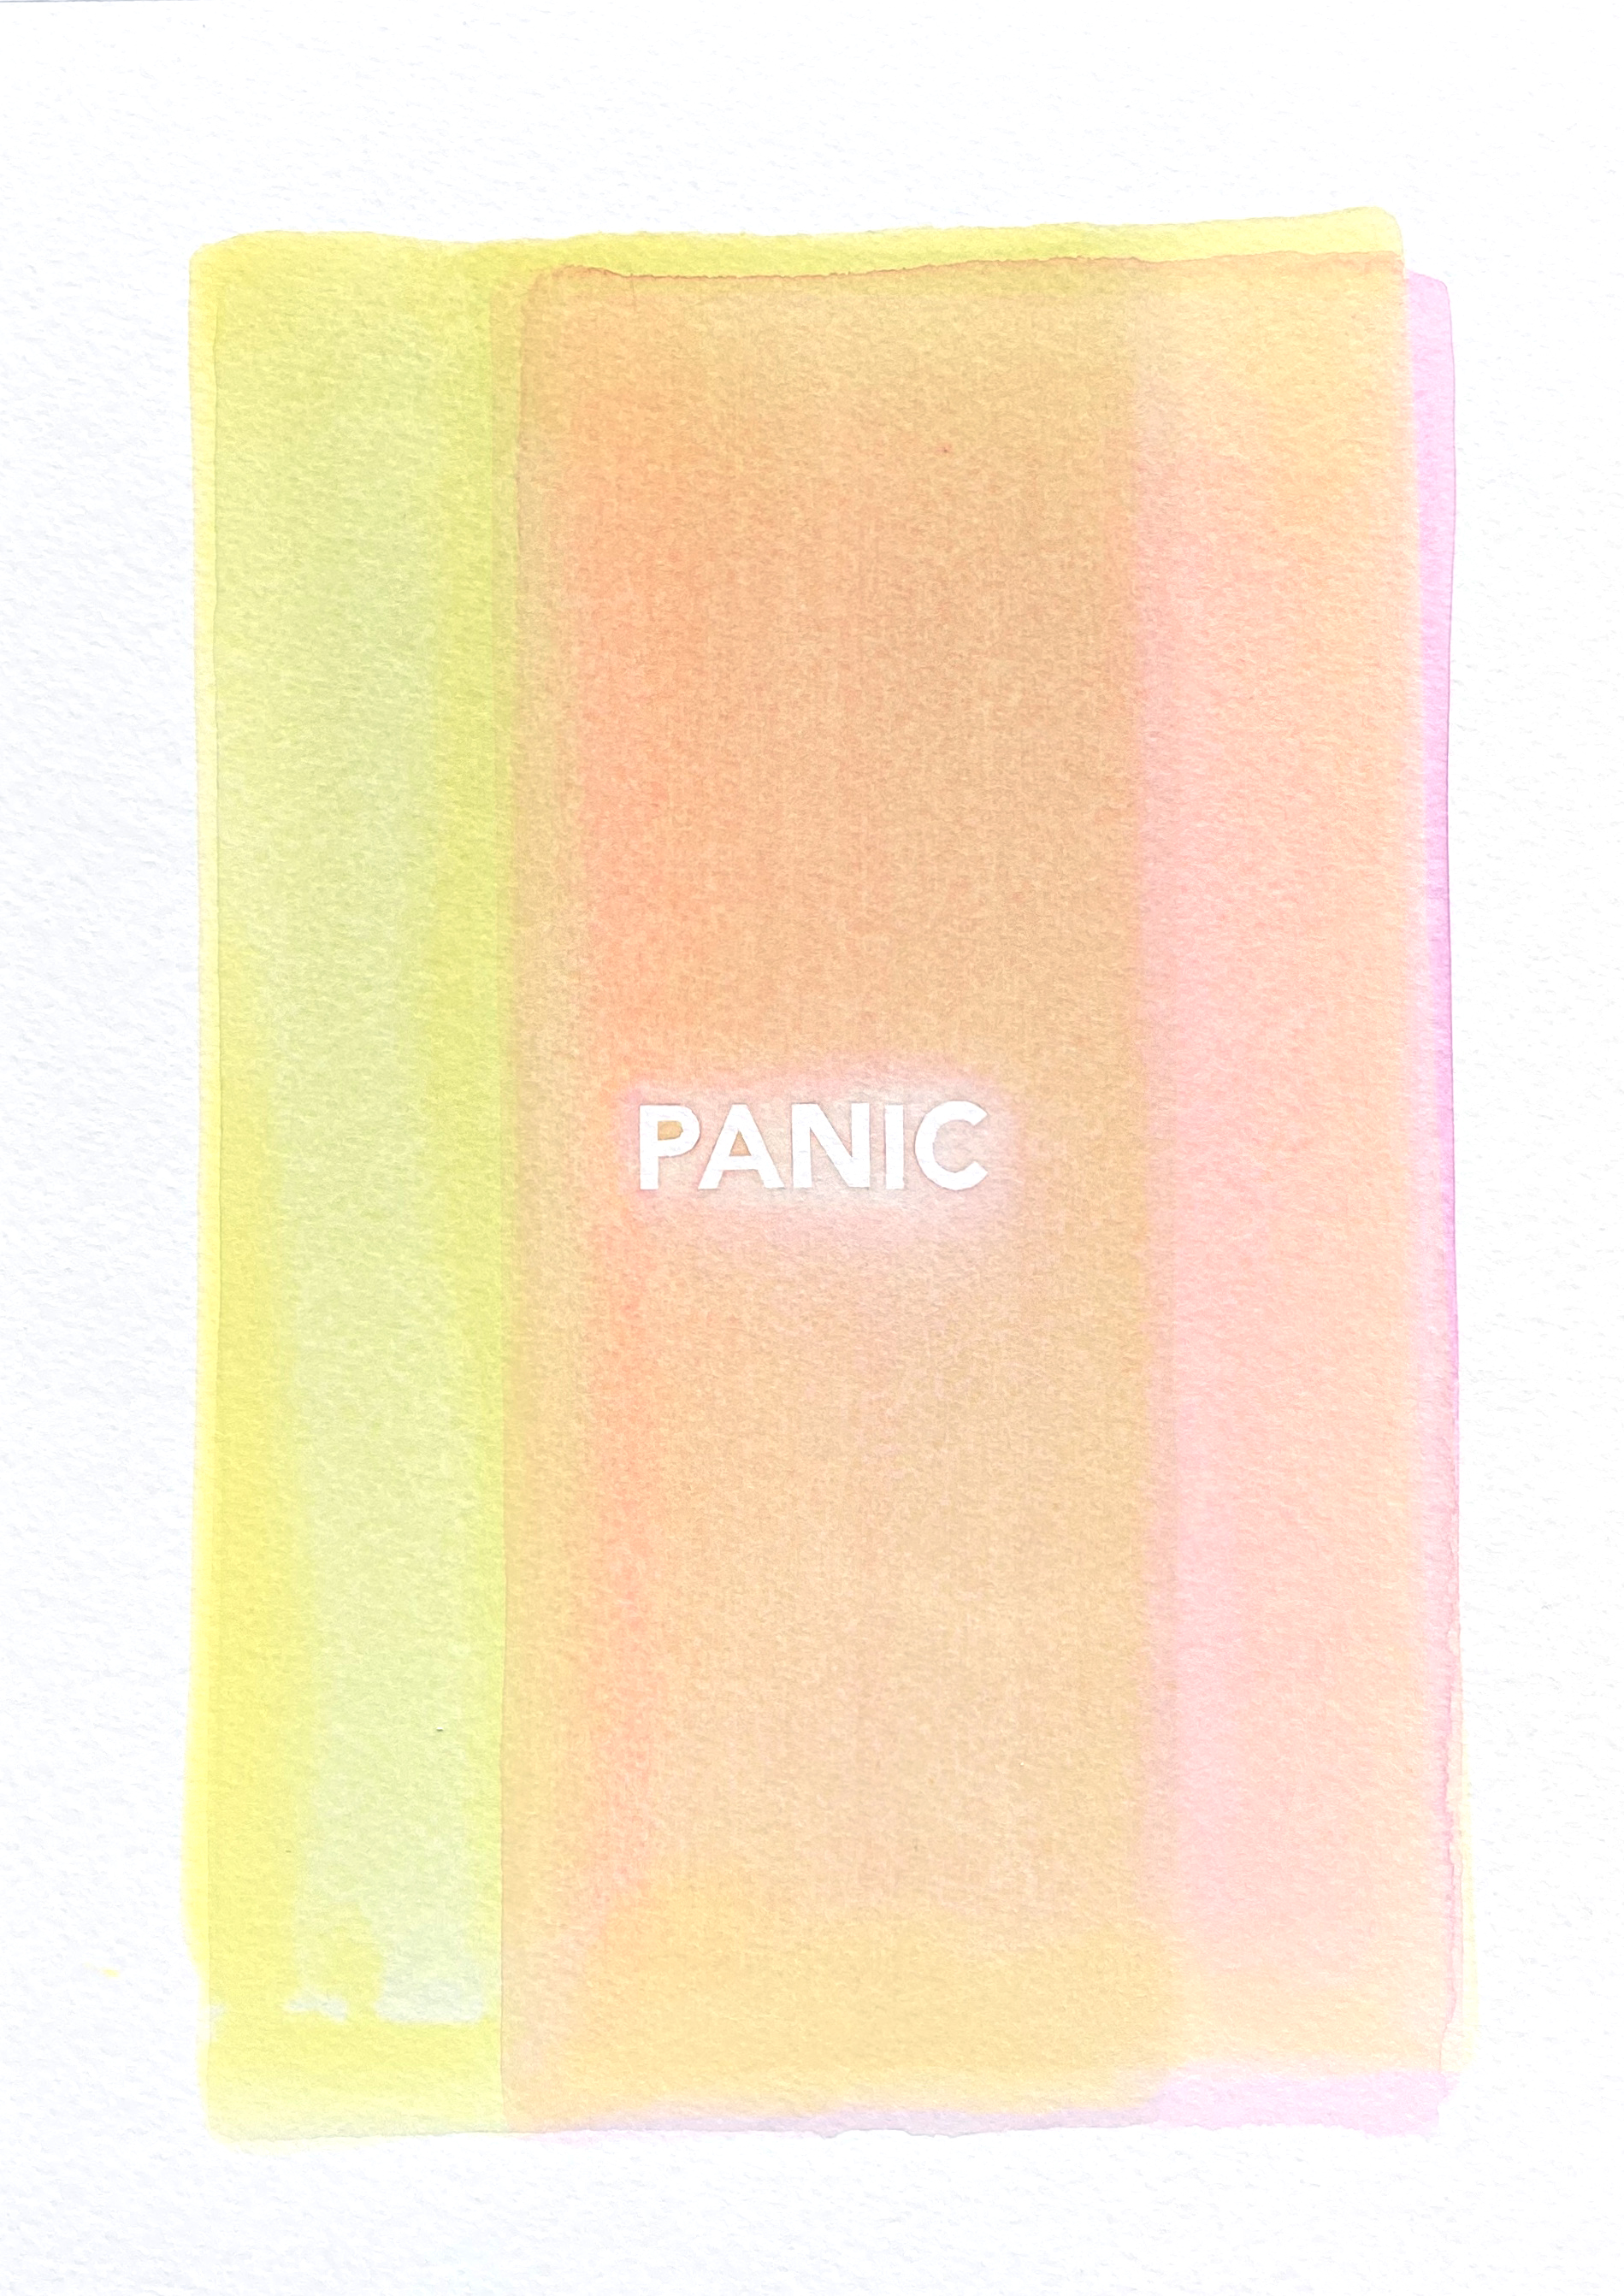 Reece Jones, Panic III, The Auction Collective